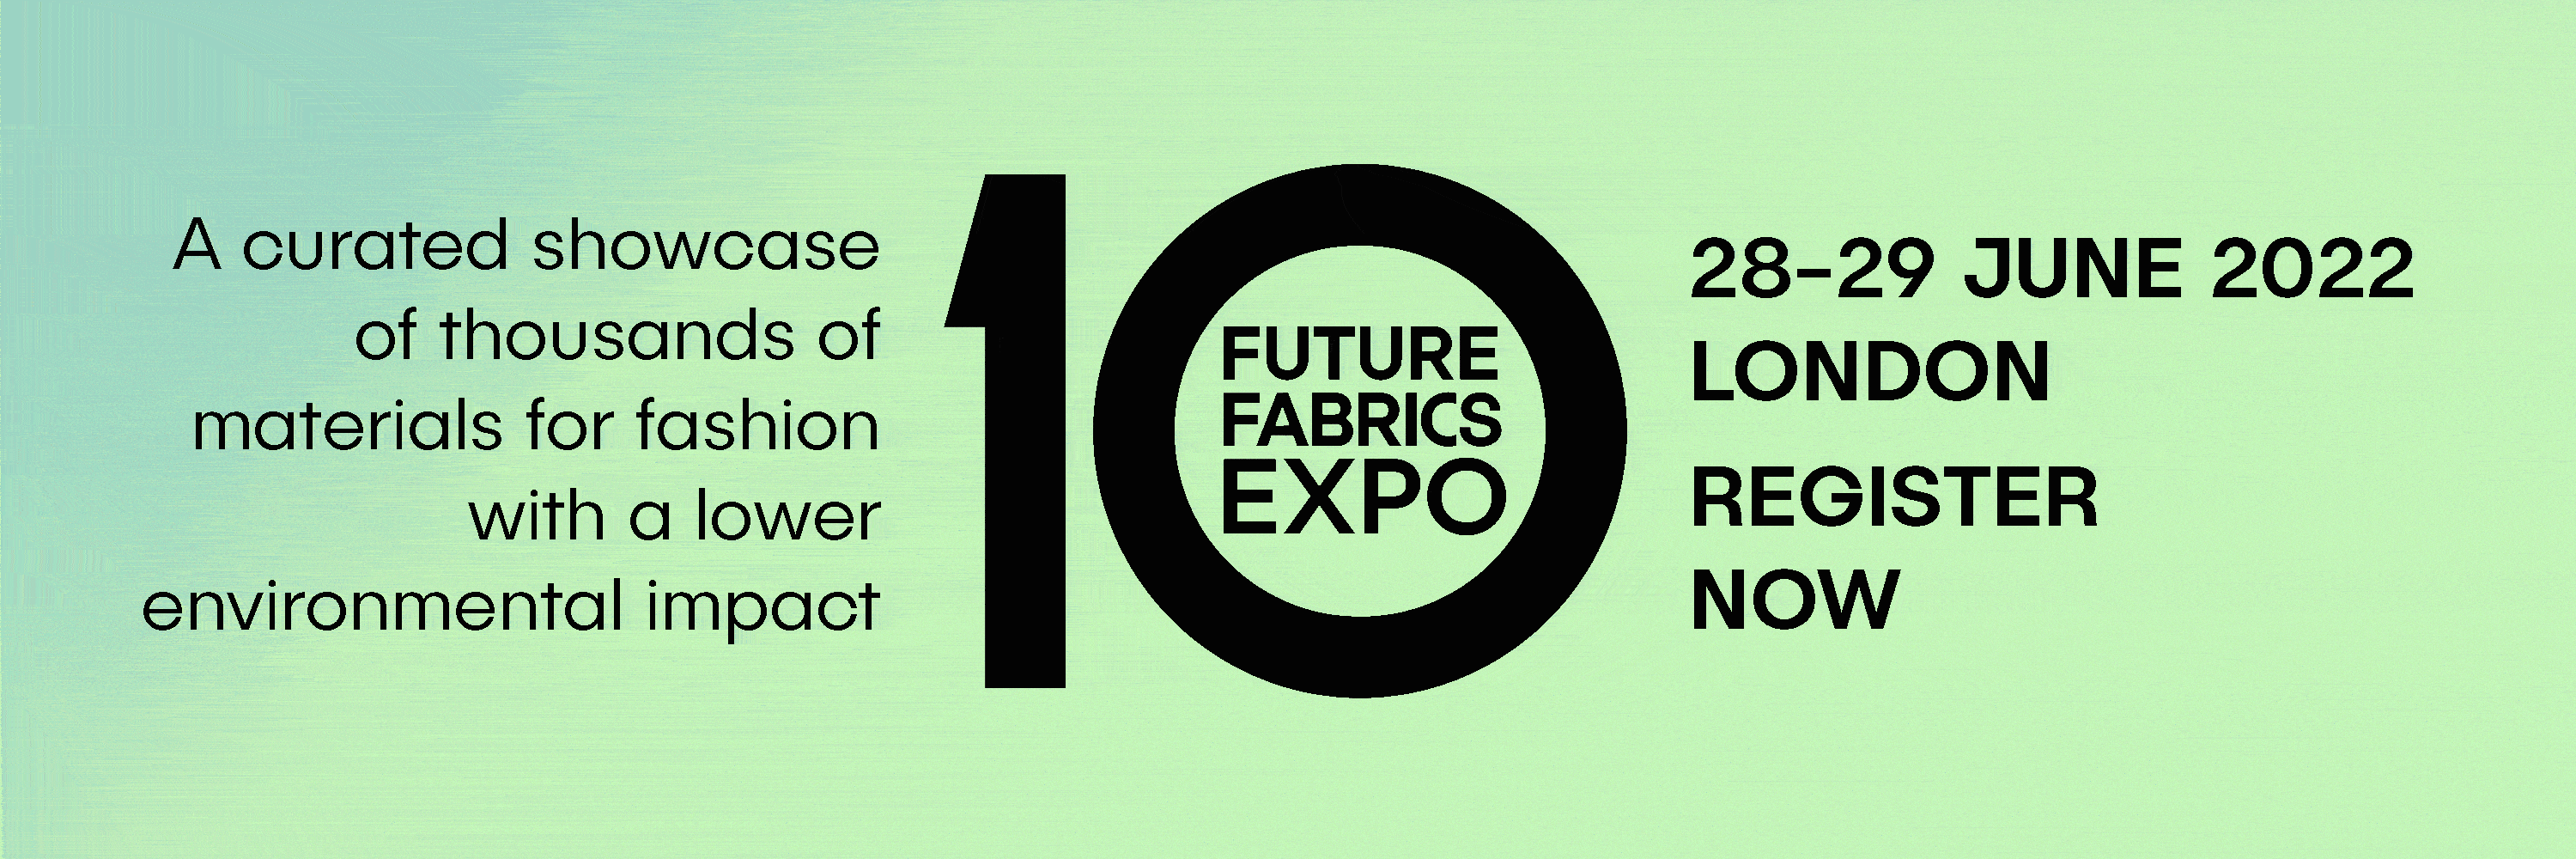 Future Fabrics Expo June 2022